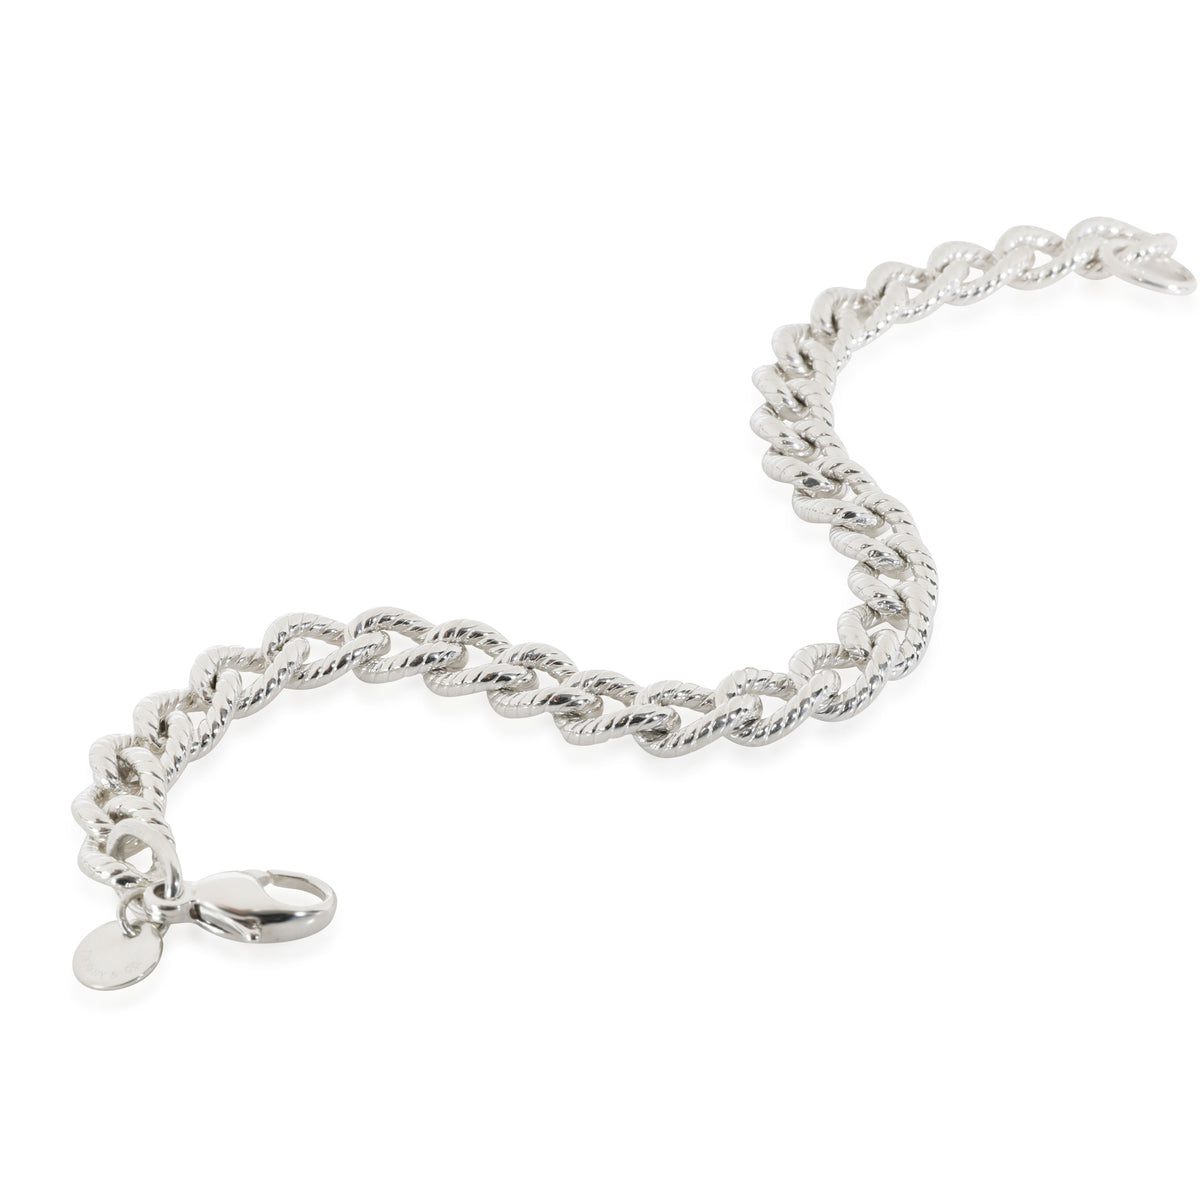 Tiffany & Co. Curb Link Bracelet in  Sterling Silver